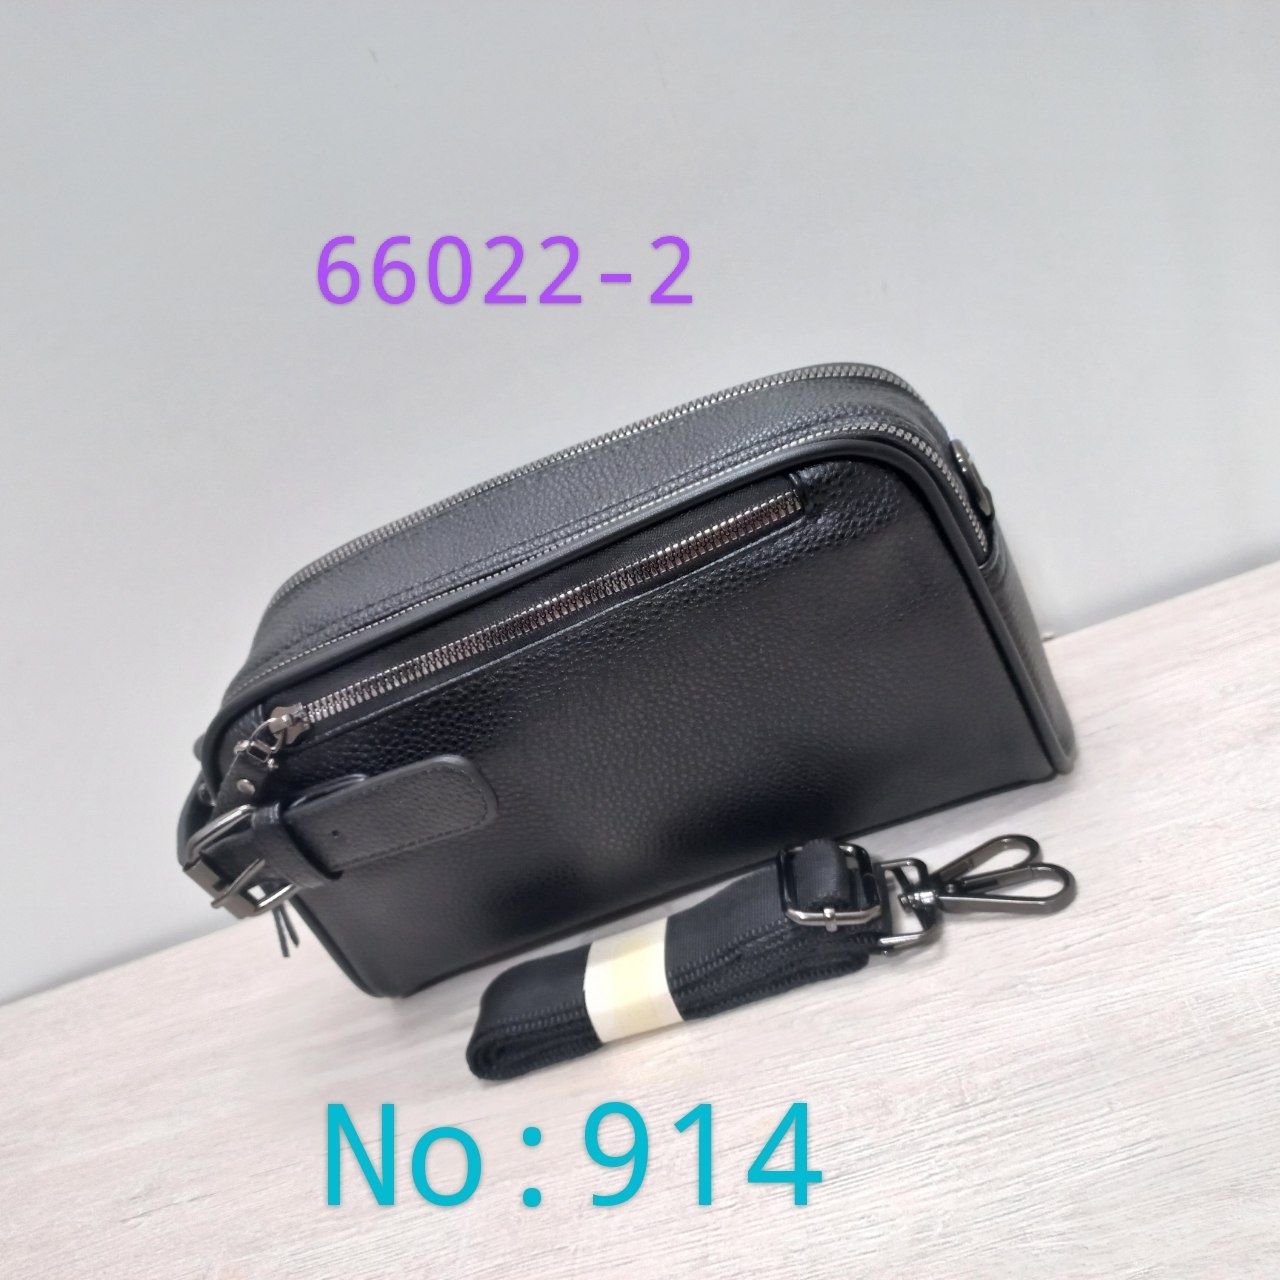 Барсетка ,портмоне ,клатч 6605A-1. No:488